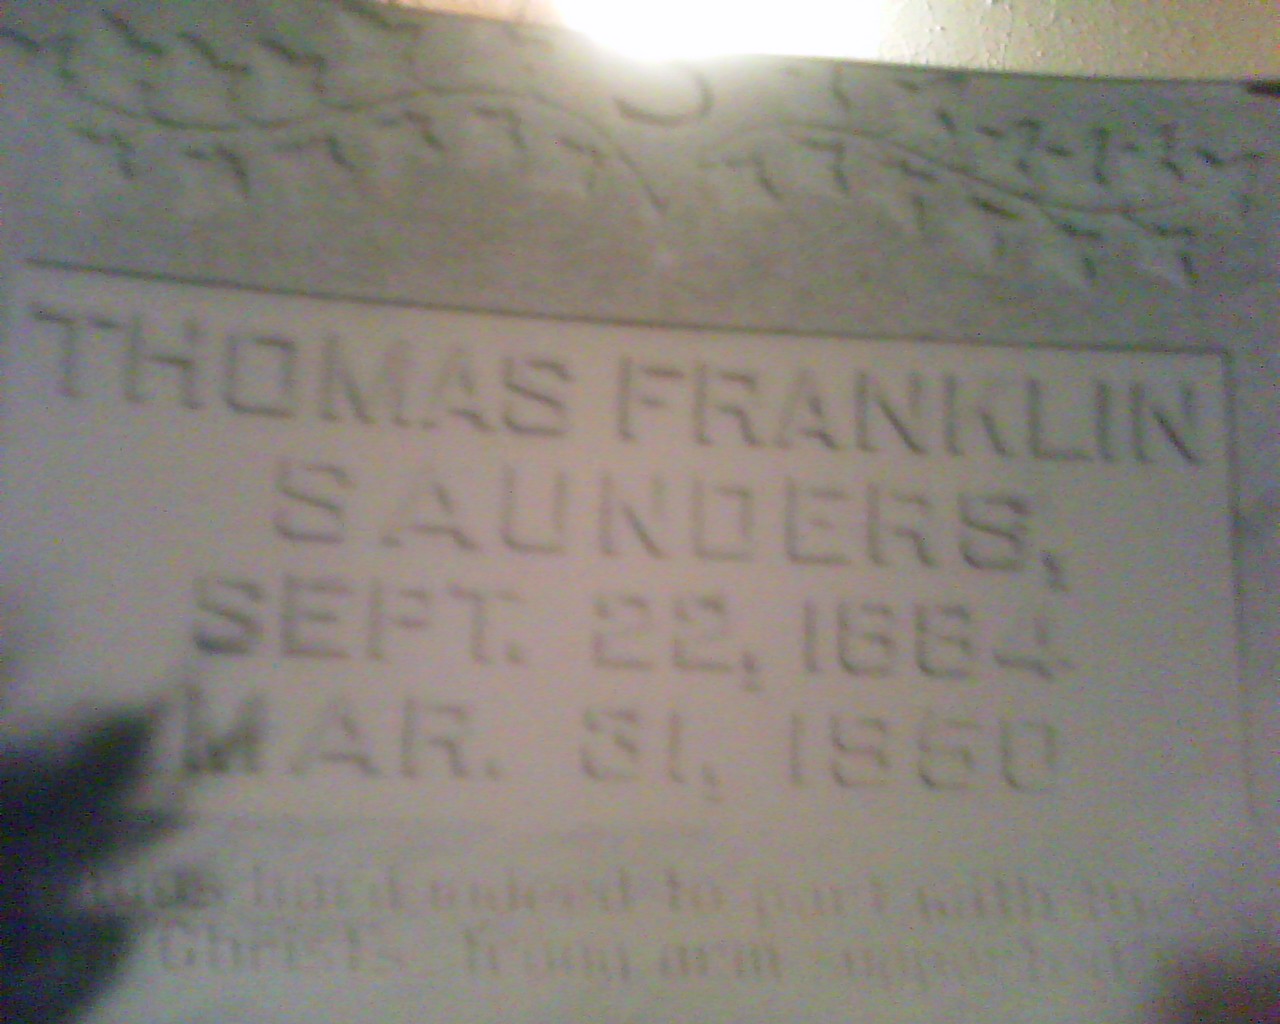 Gravestone of Thomas Franklyn Saunders